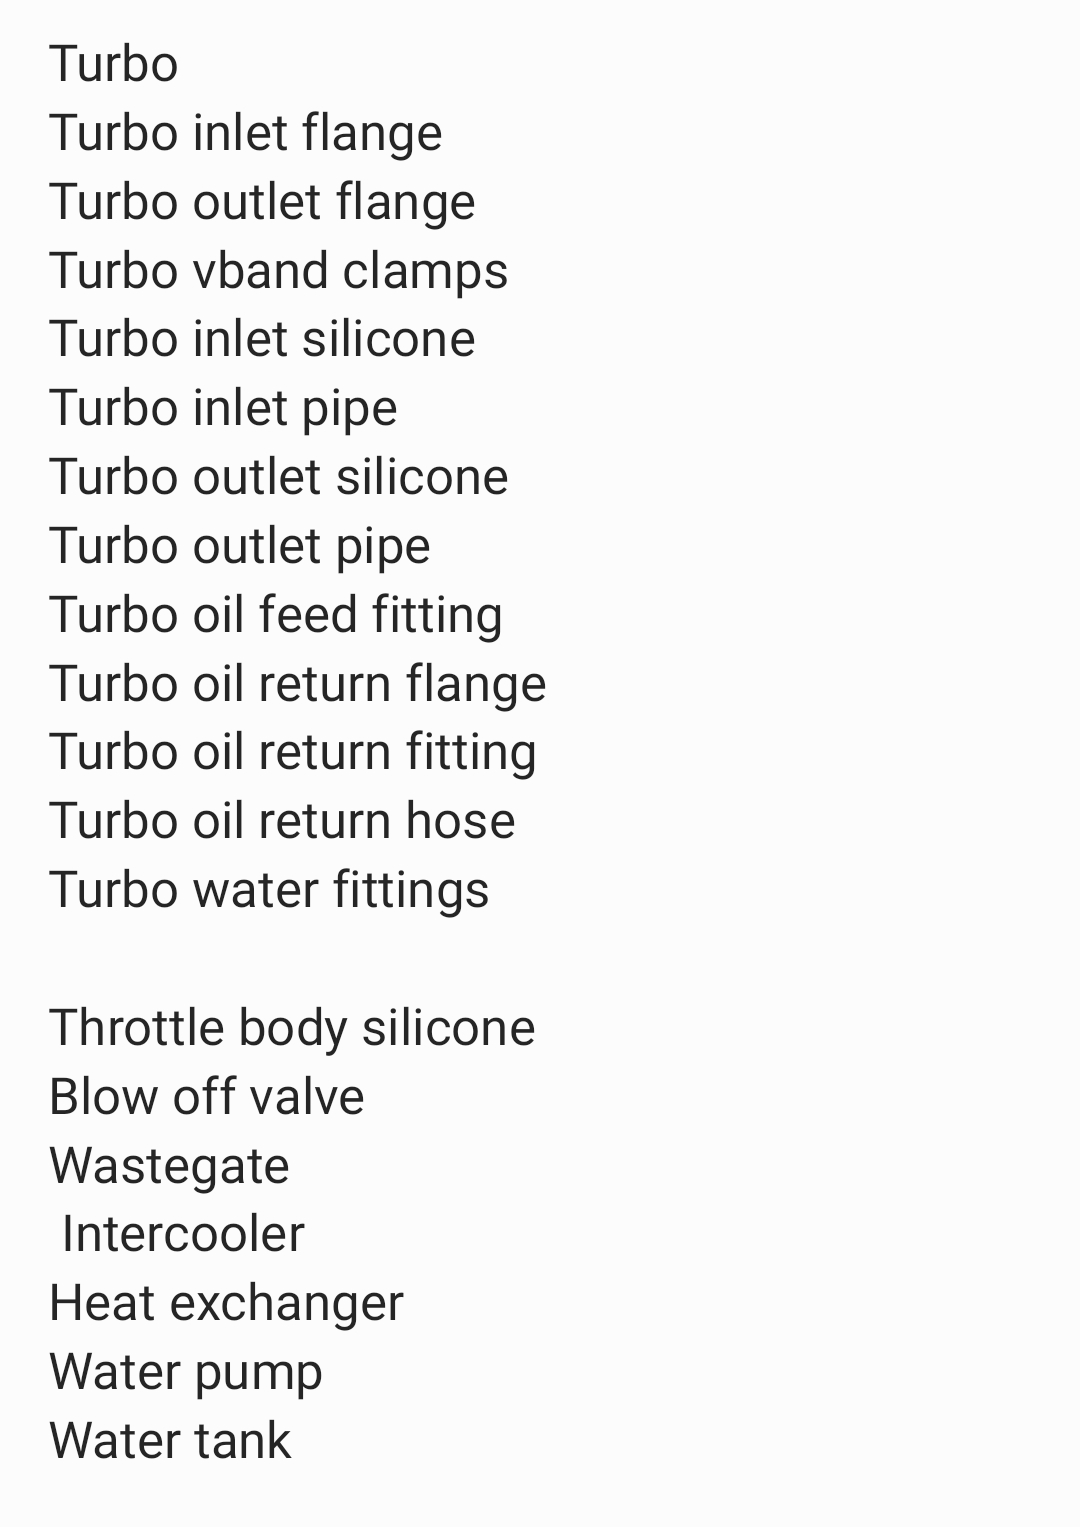 Turbo Parts_220518_221642_1.jpg